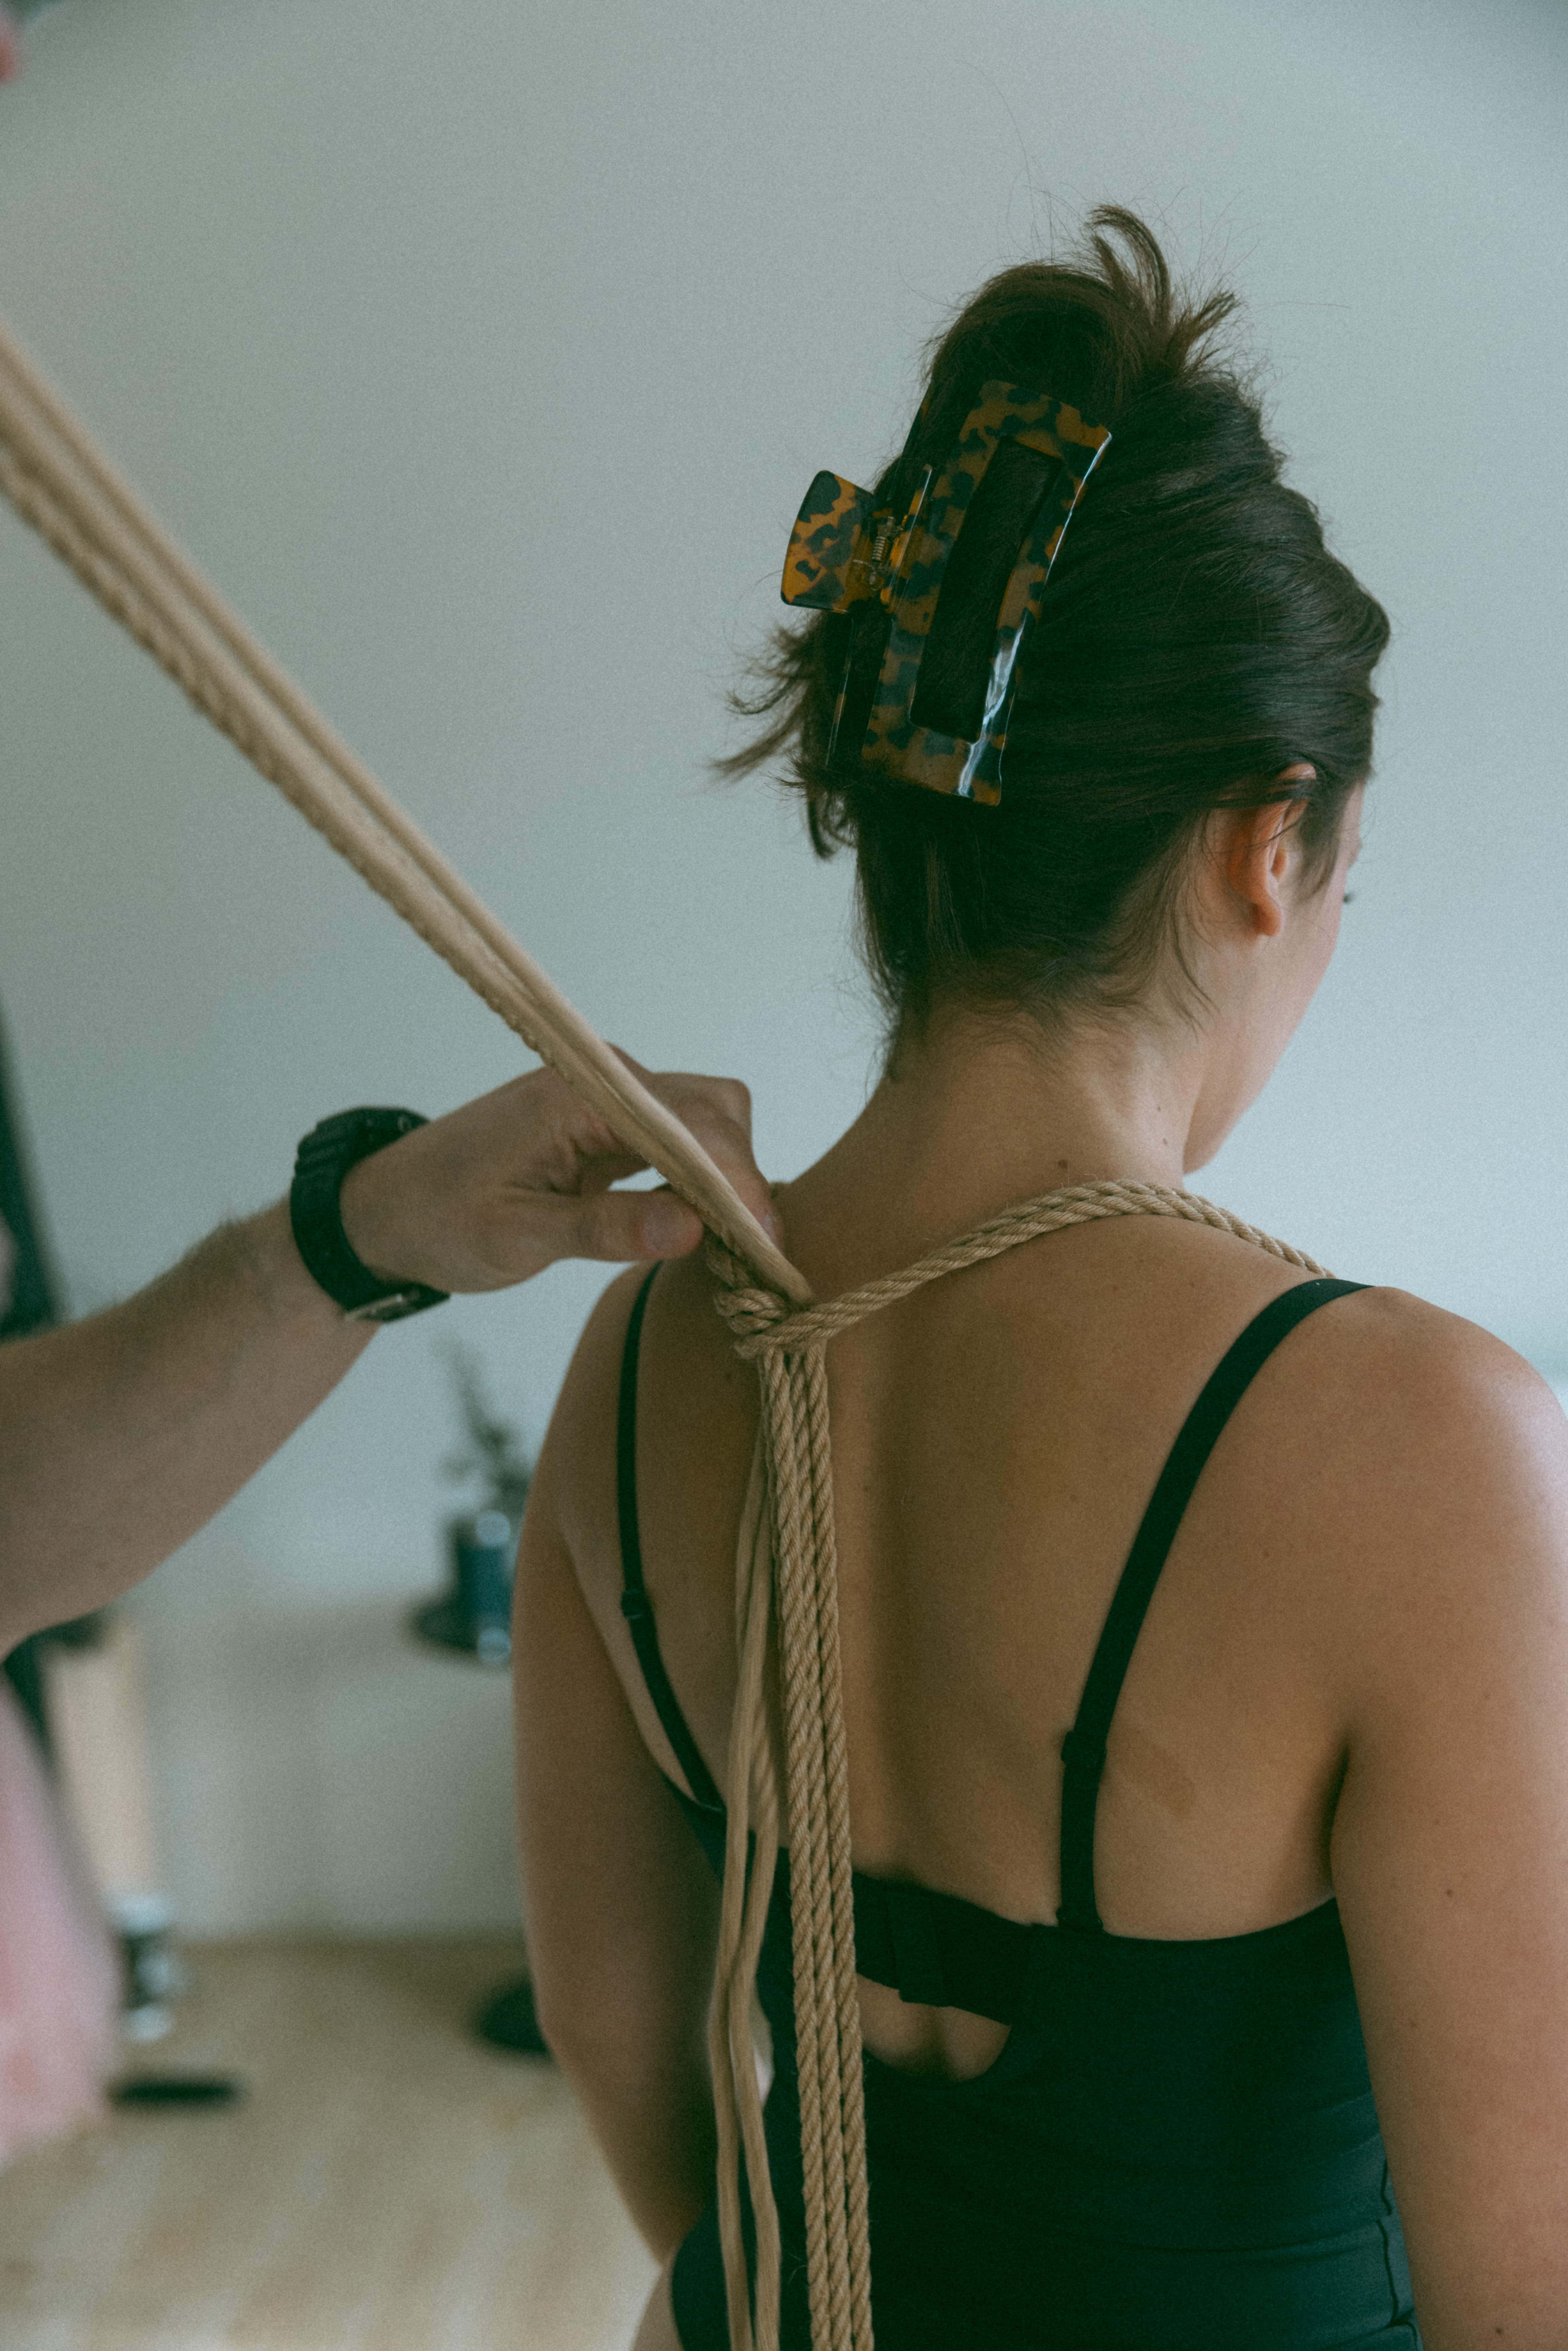 shibari artist tying a rope onto a woman